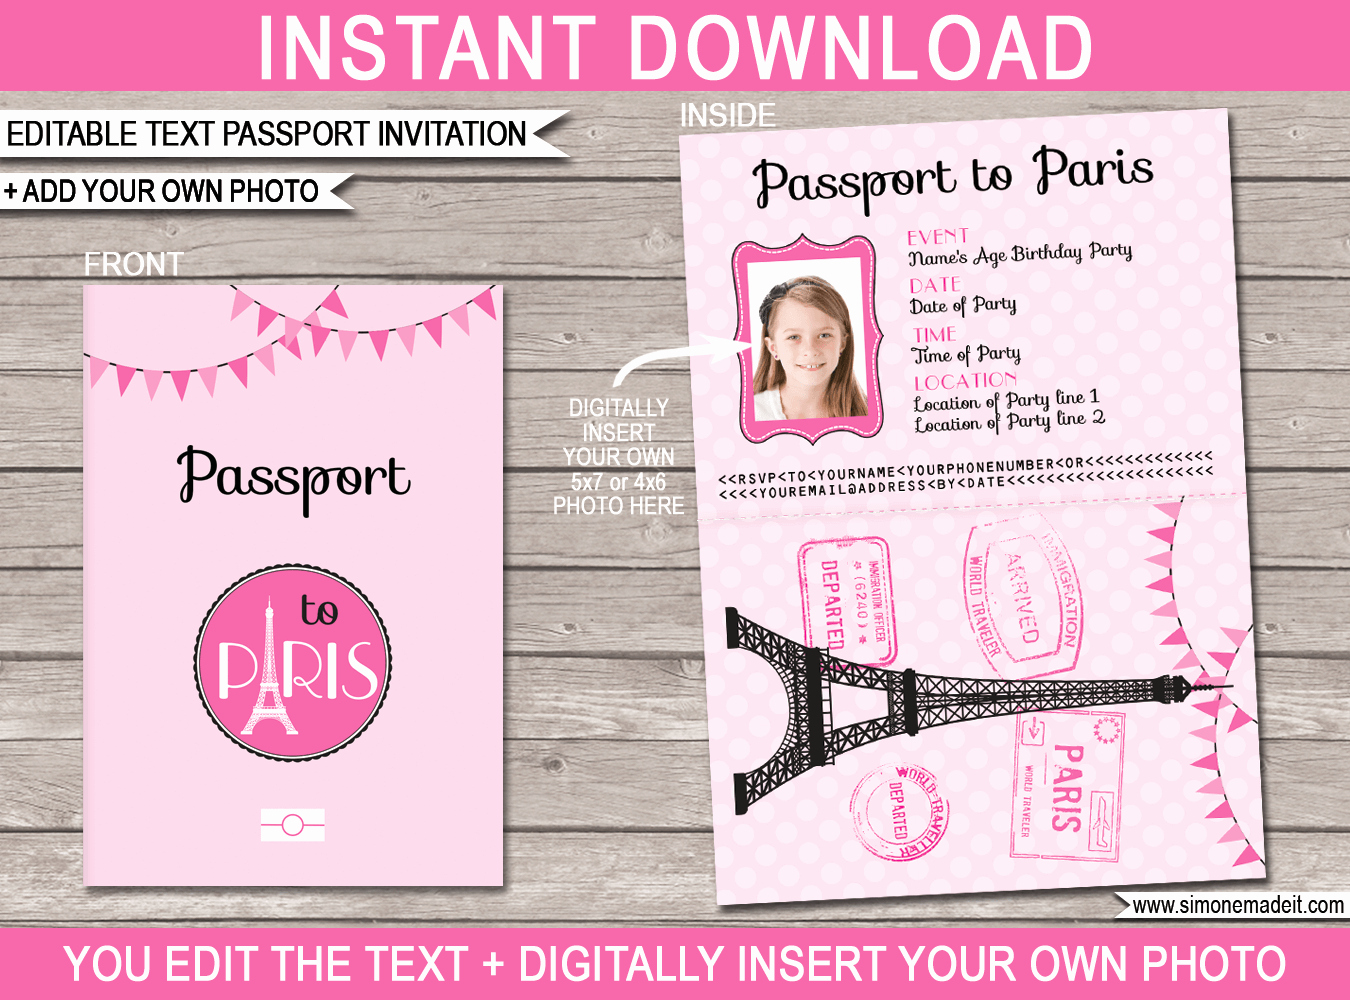 Paris Passport Invitation Template New Paris Passport Invitation Template with Photo